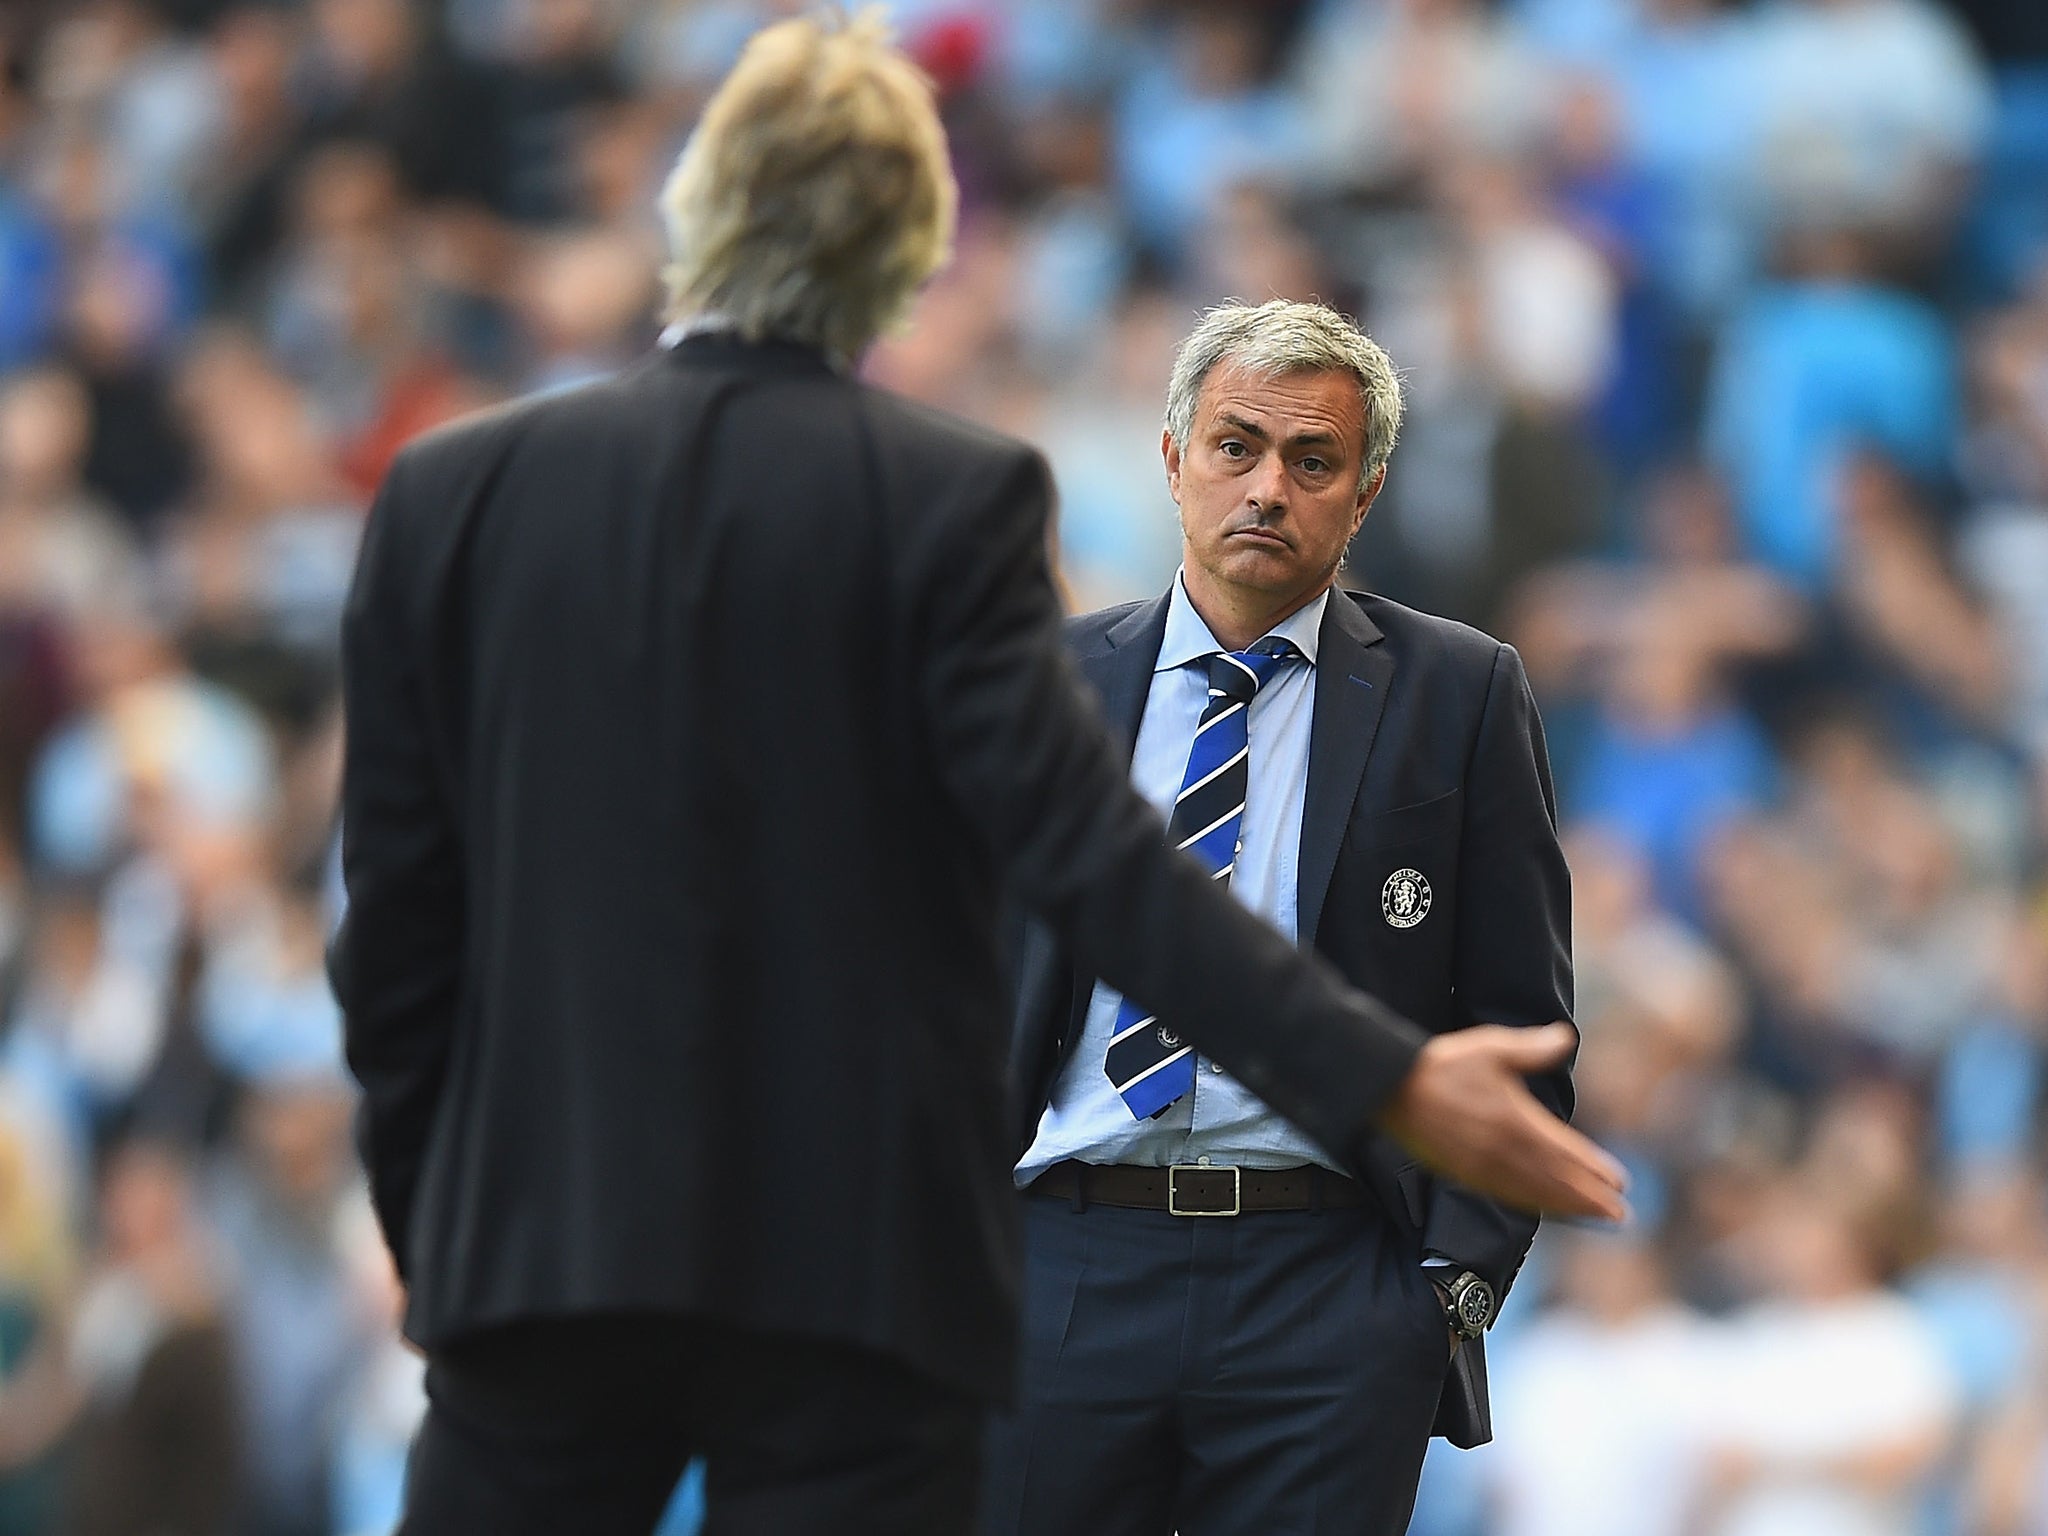 Jose Mourinho of Chelsea speaks with Manuel Pellegrini of Manchester City